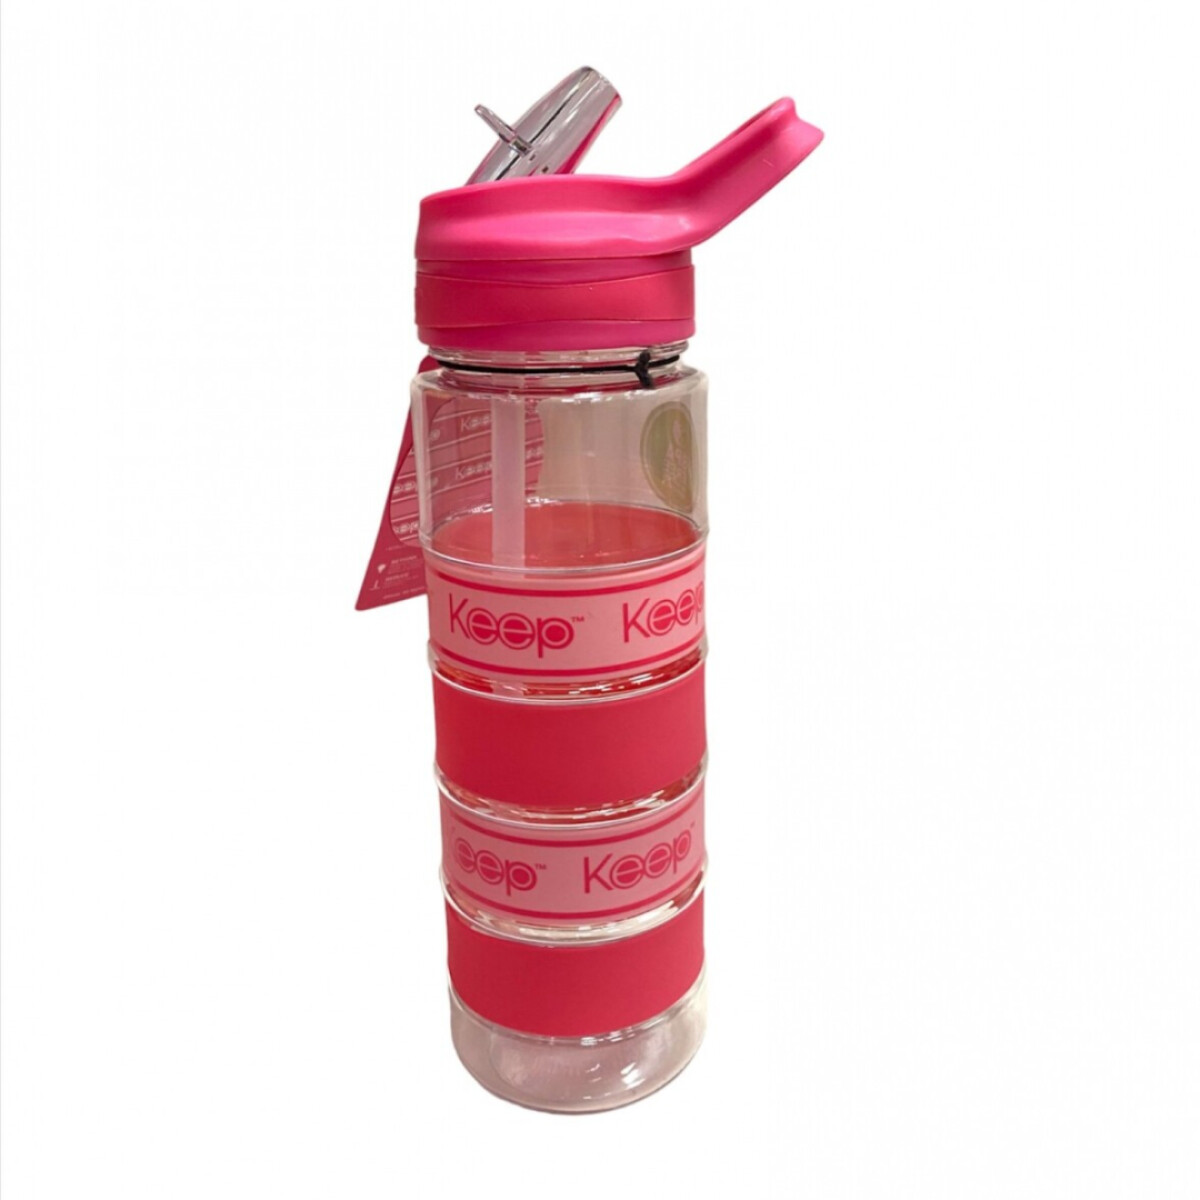 Botella Keep Linear 750ML - ROSA 